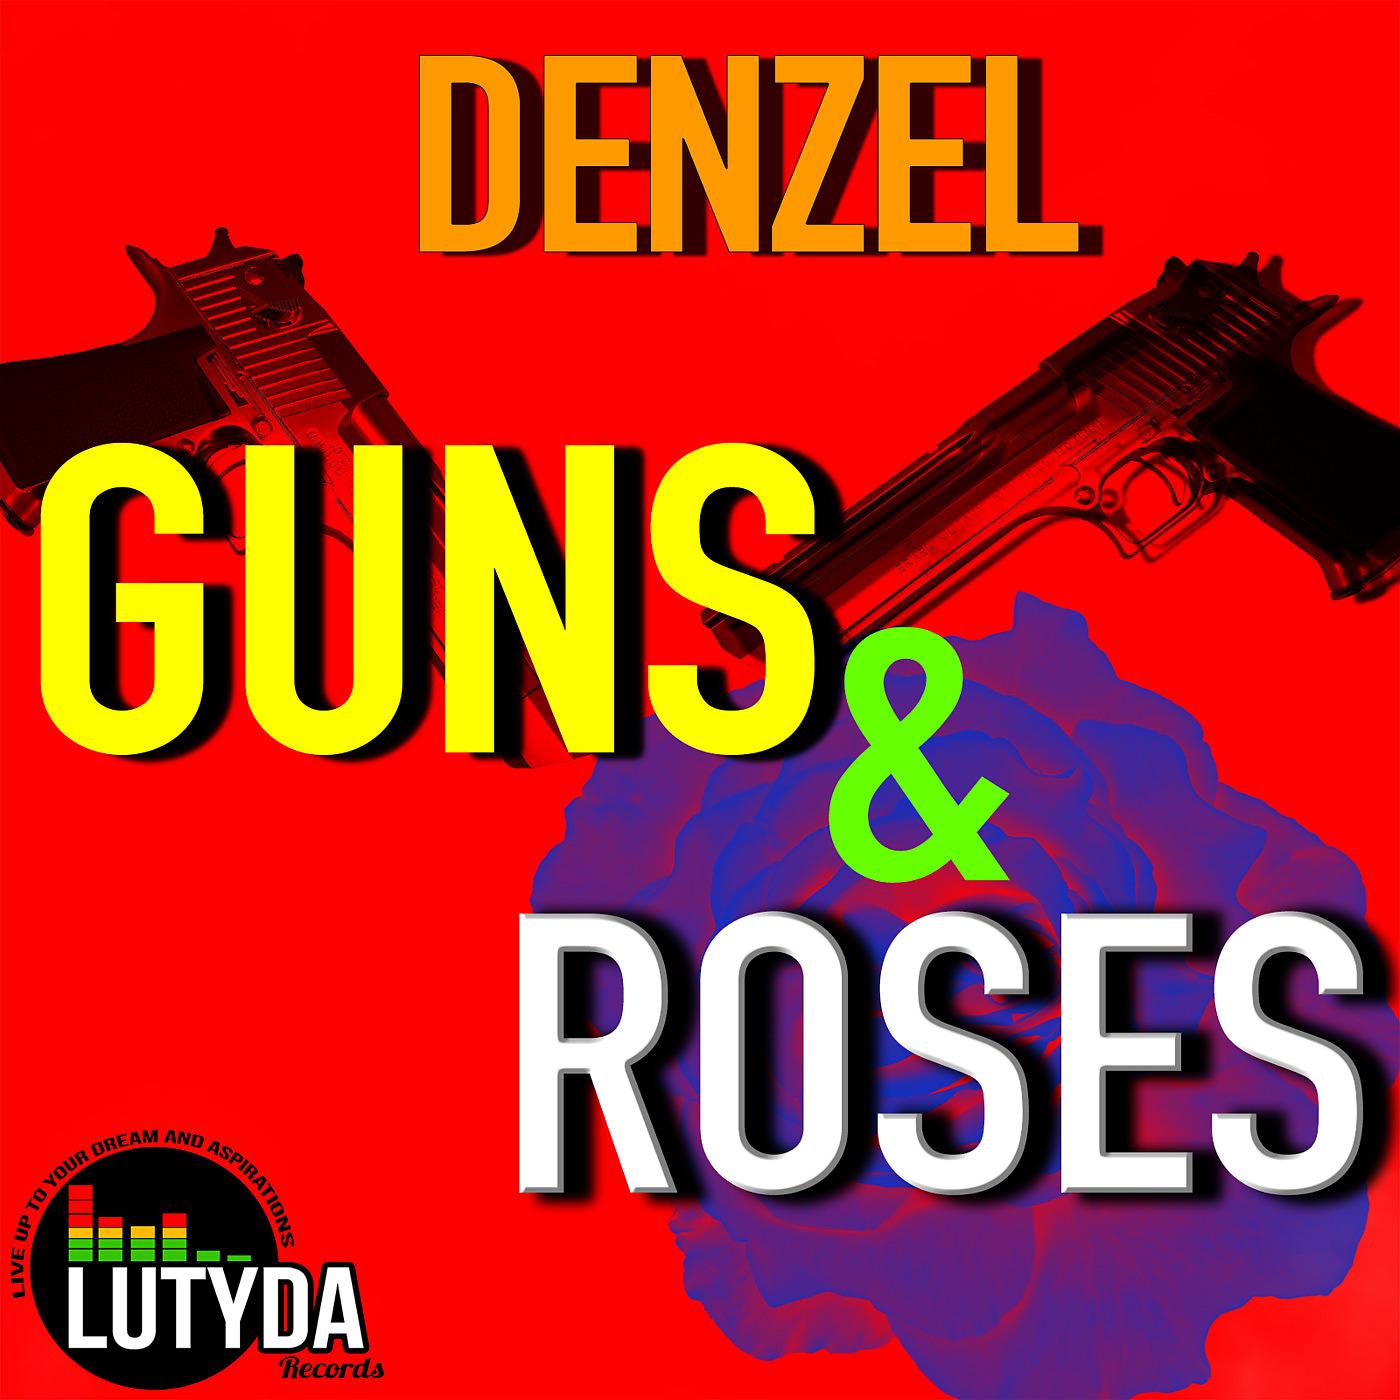 Guns roses песни